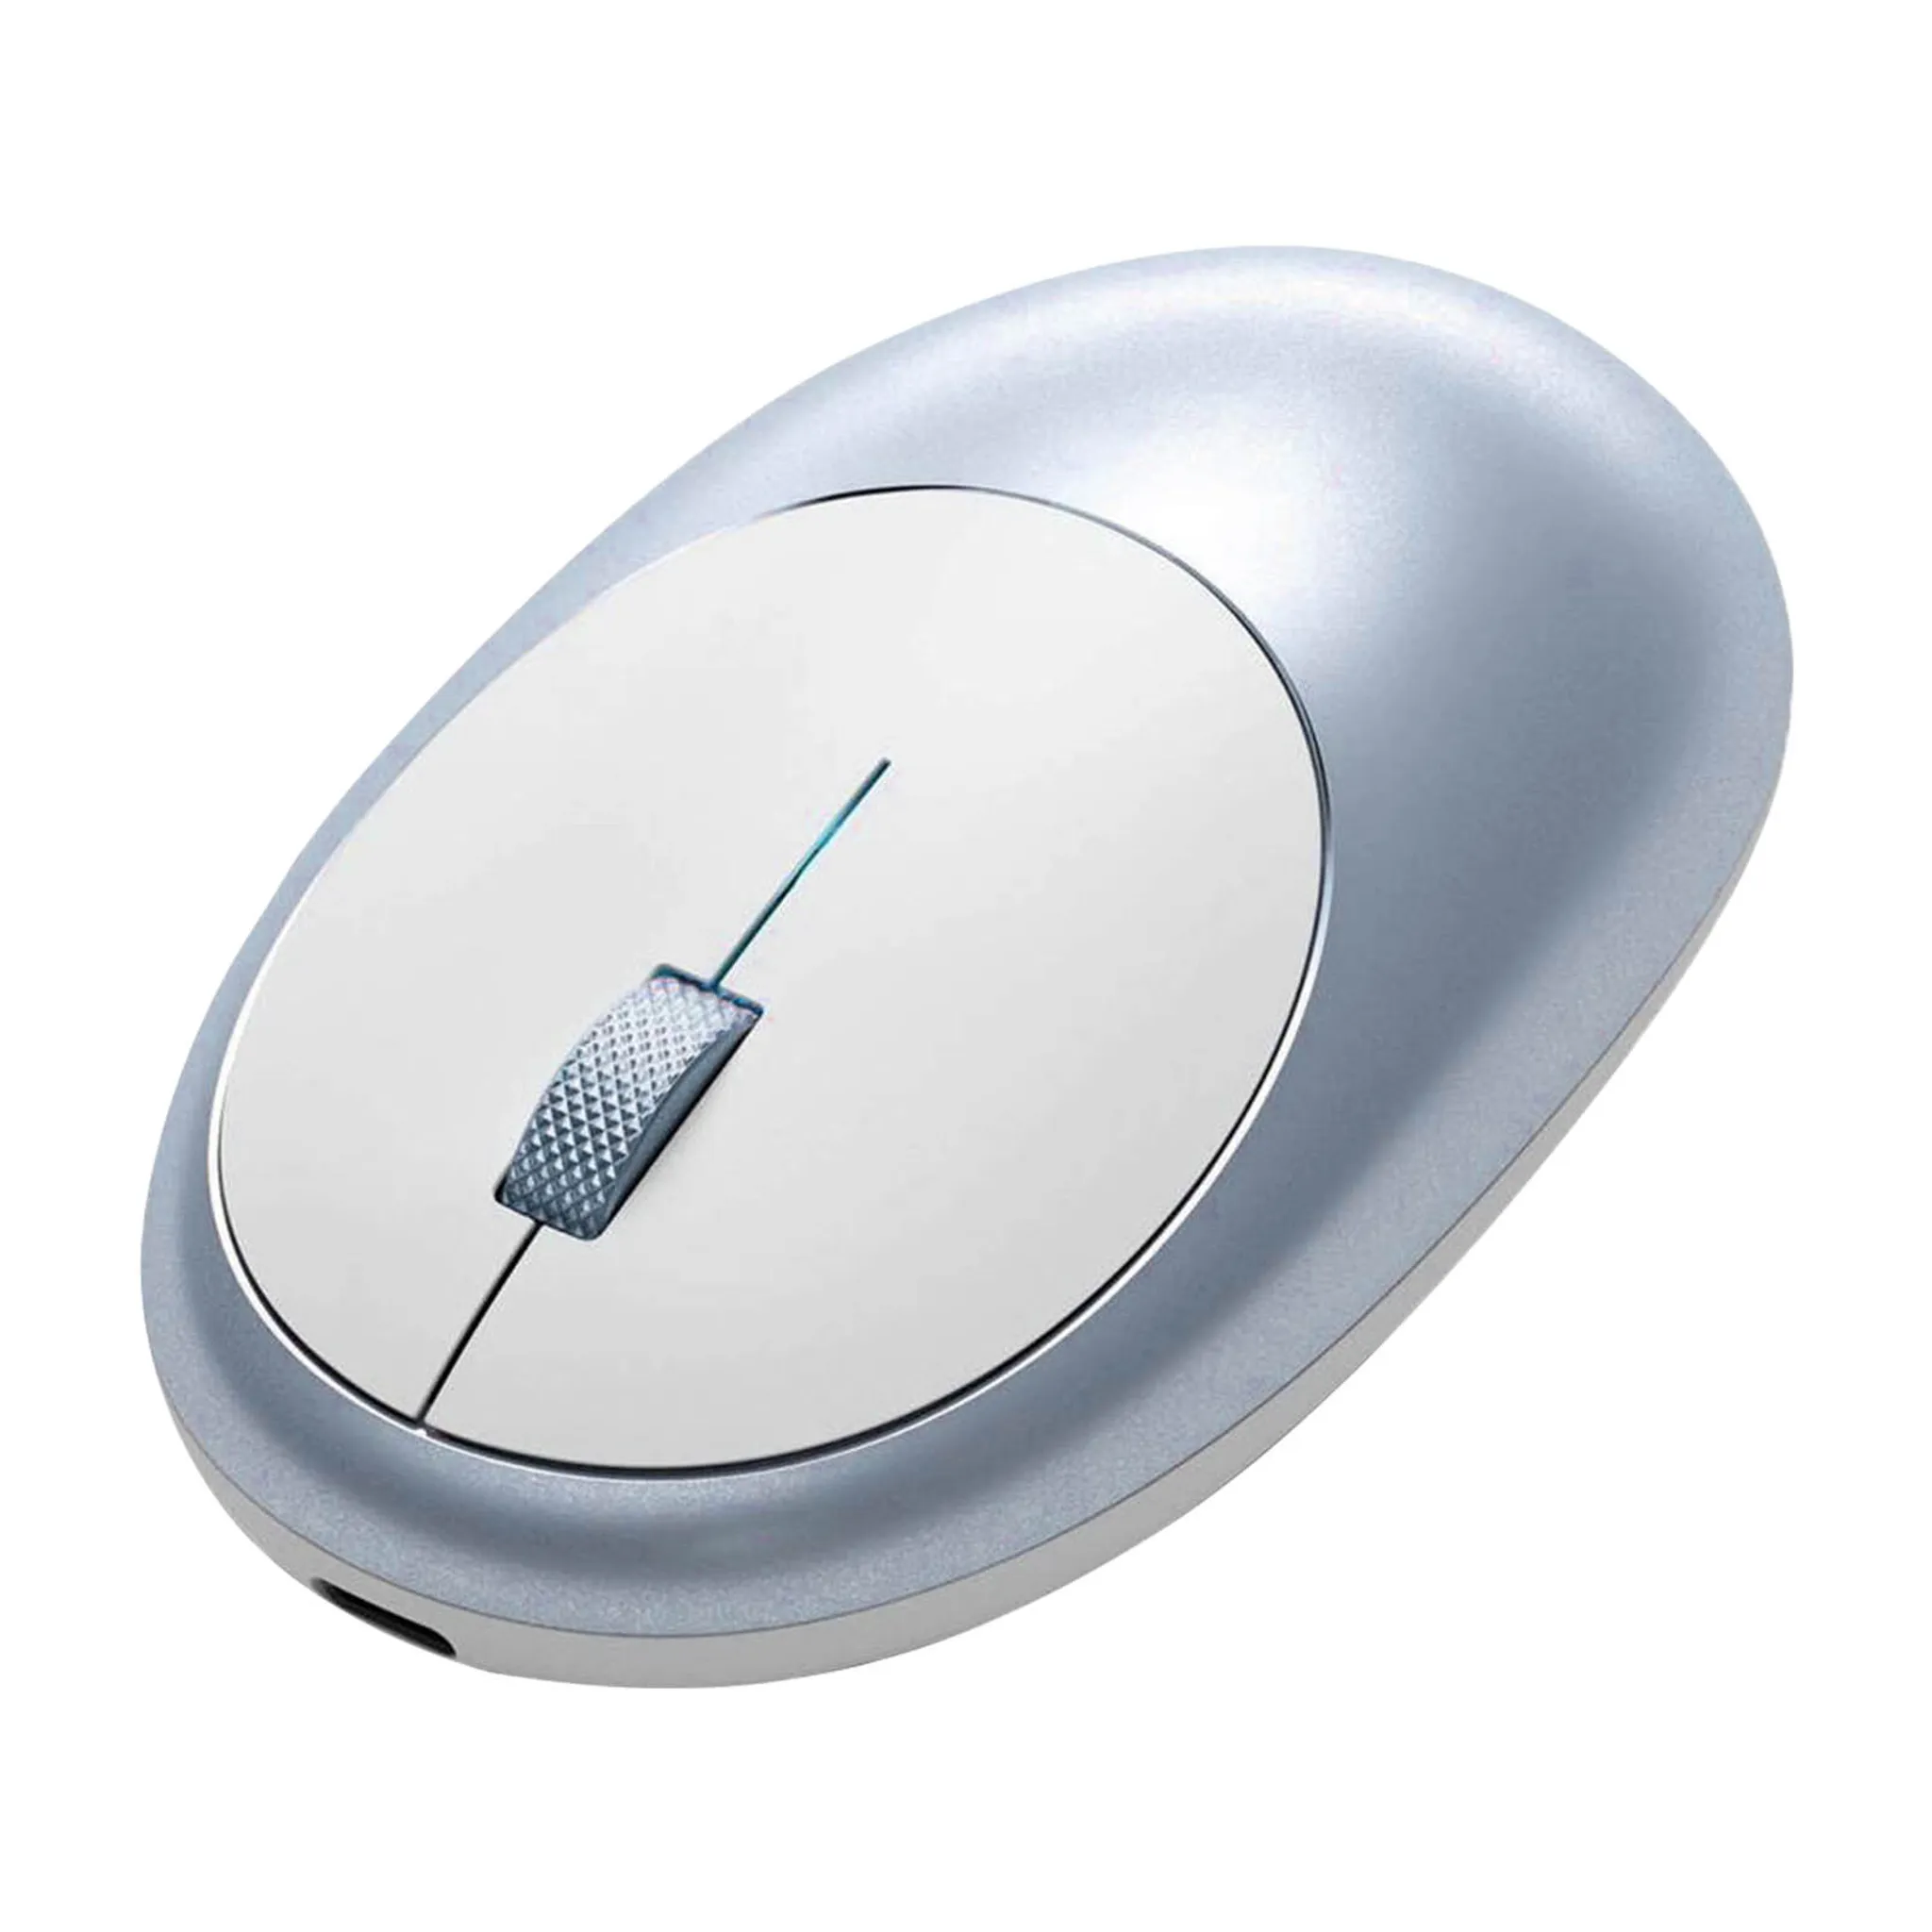 M1 Bluetooth Satechi Wireless Mouse Blau -